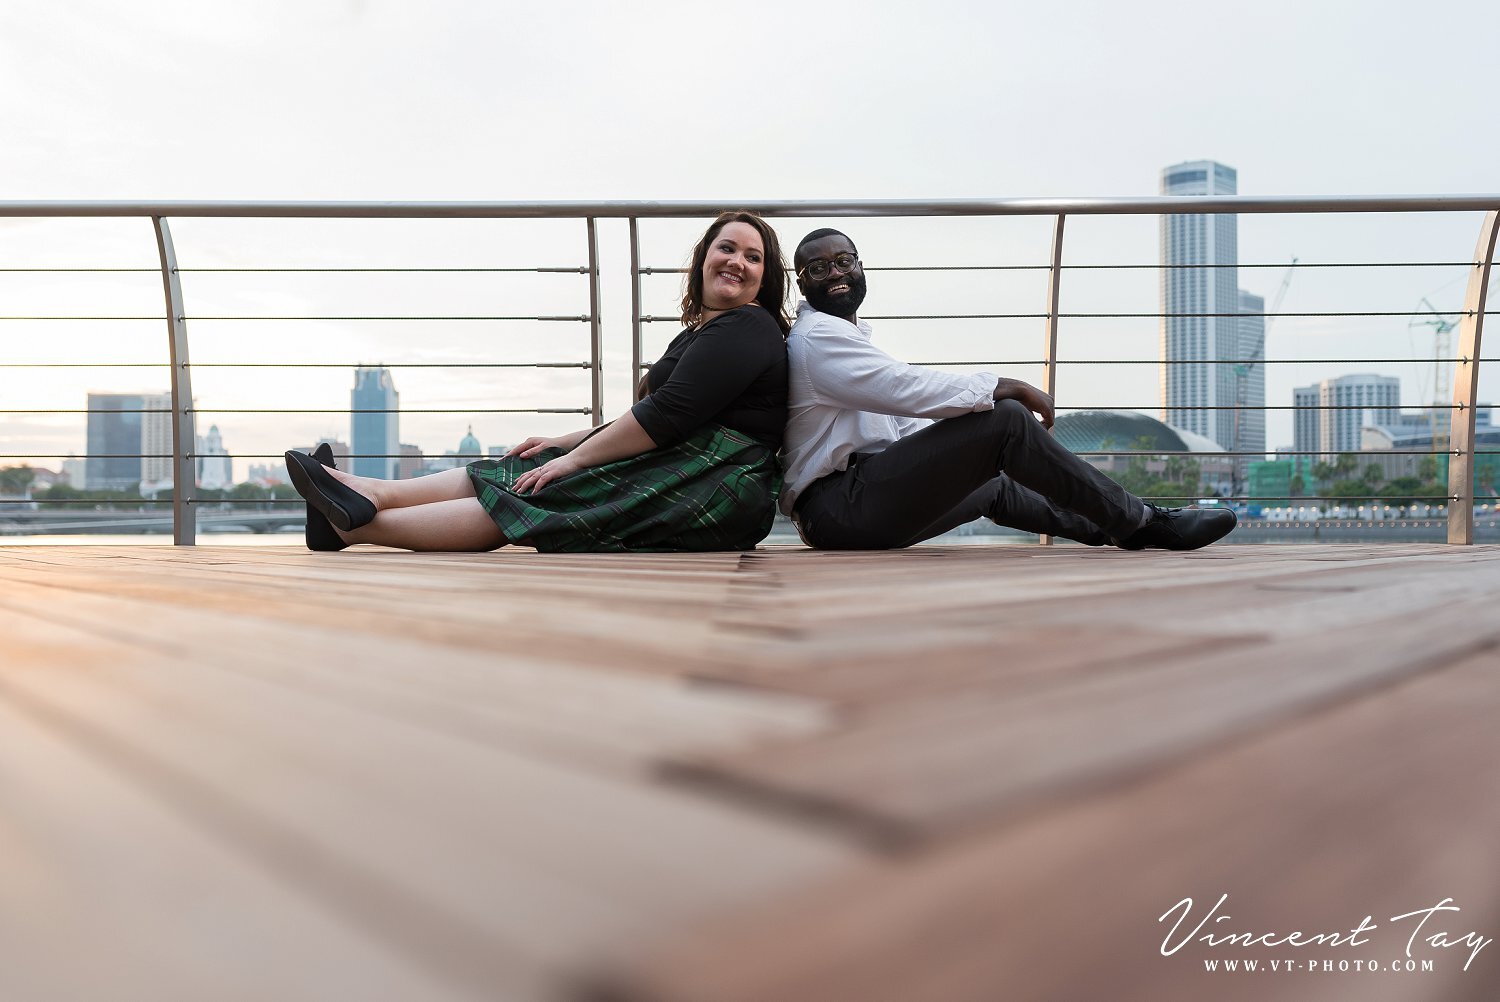 Couple Photoshoot in Singapore